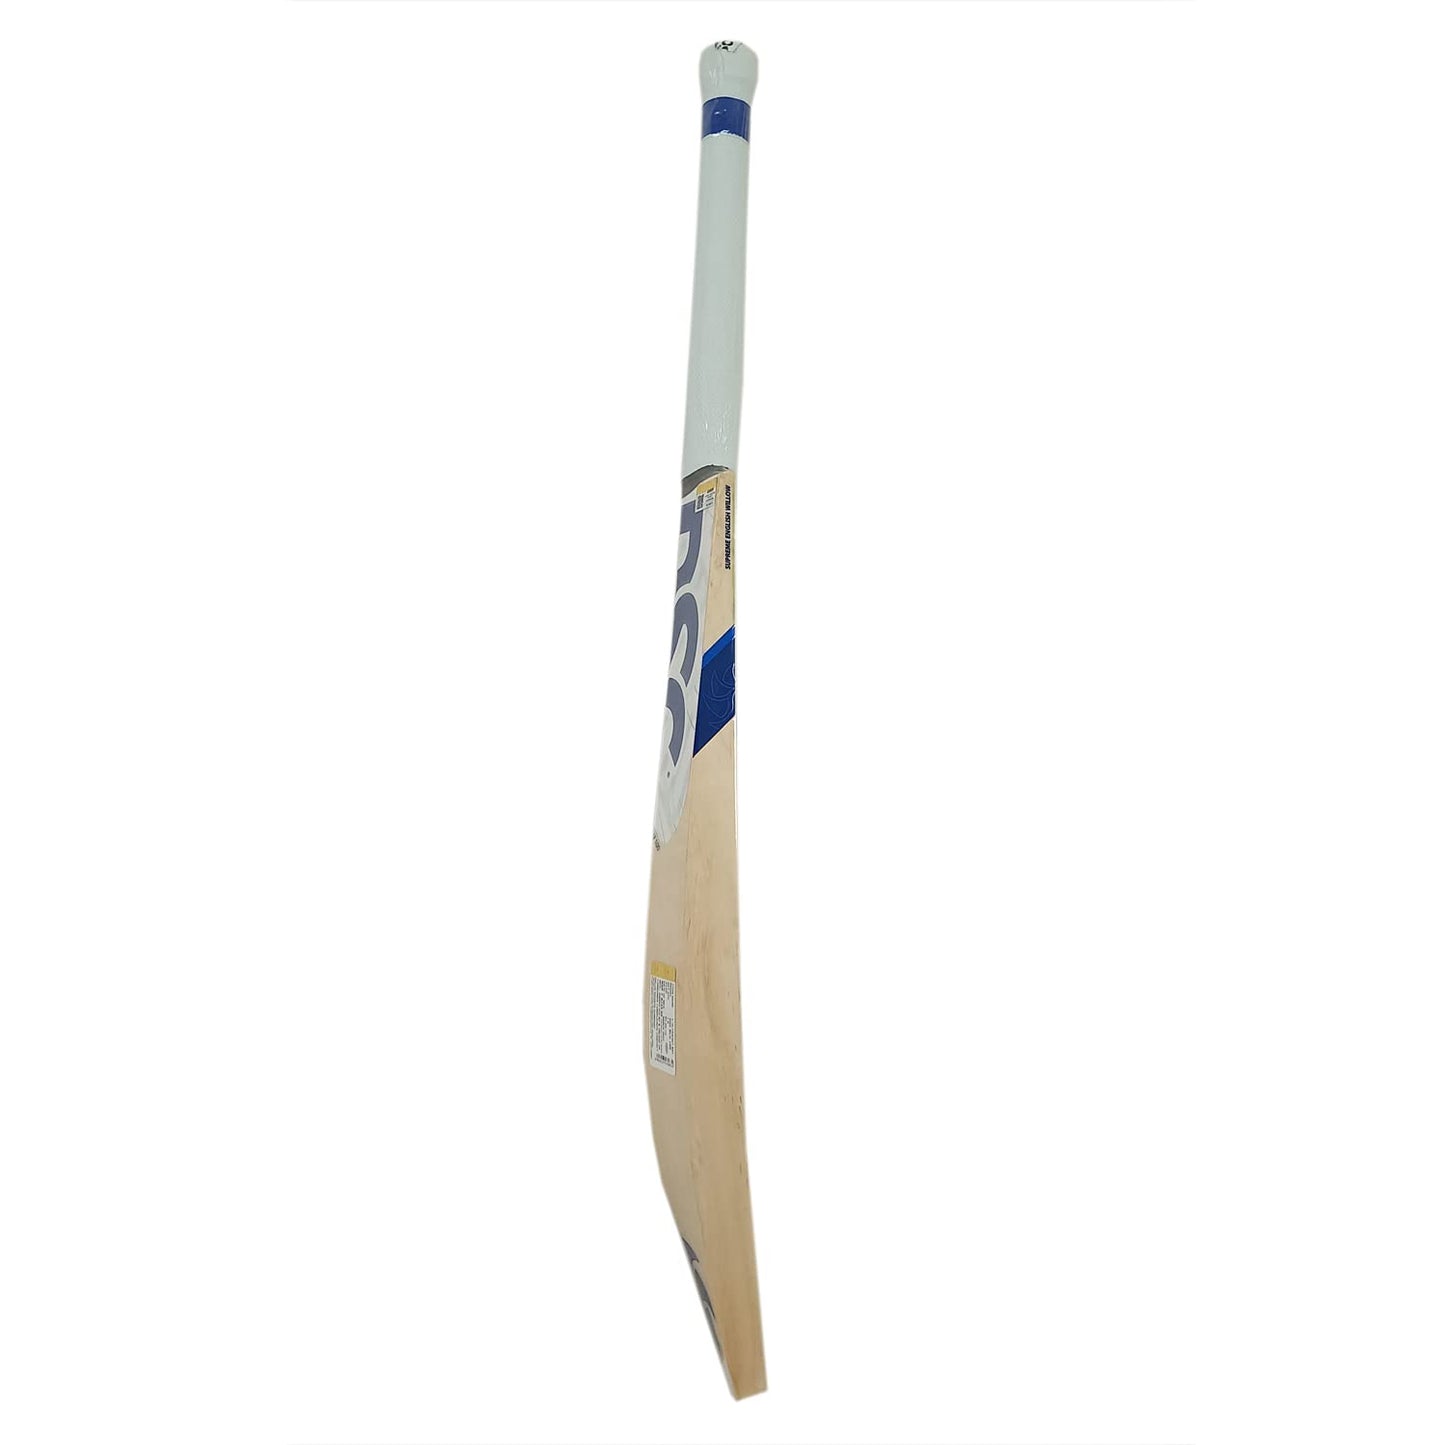 DSC Blu 100 English Willow Cricket Bat - Best Price online Prokicksports.com